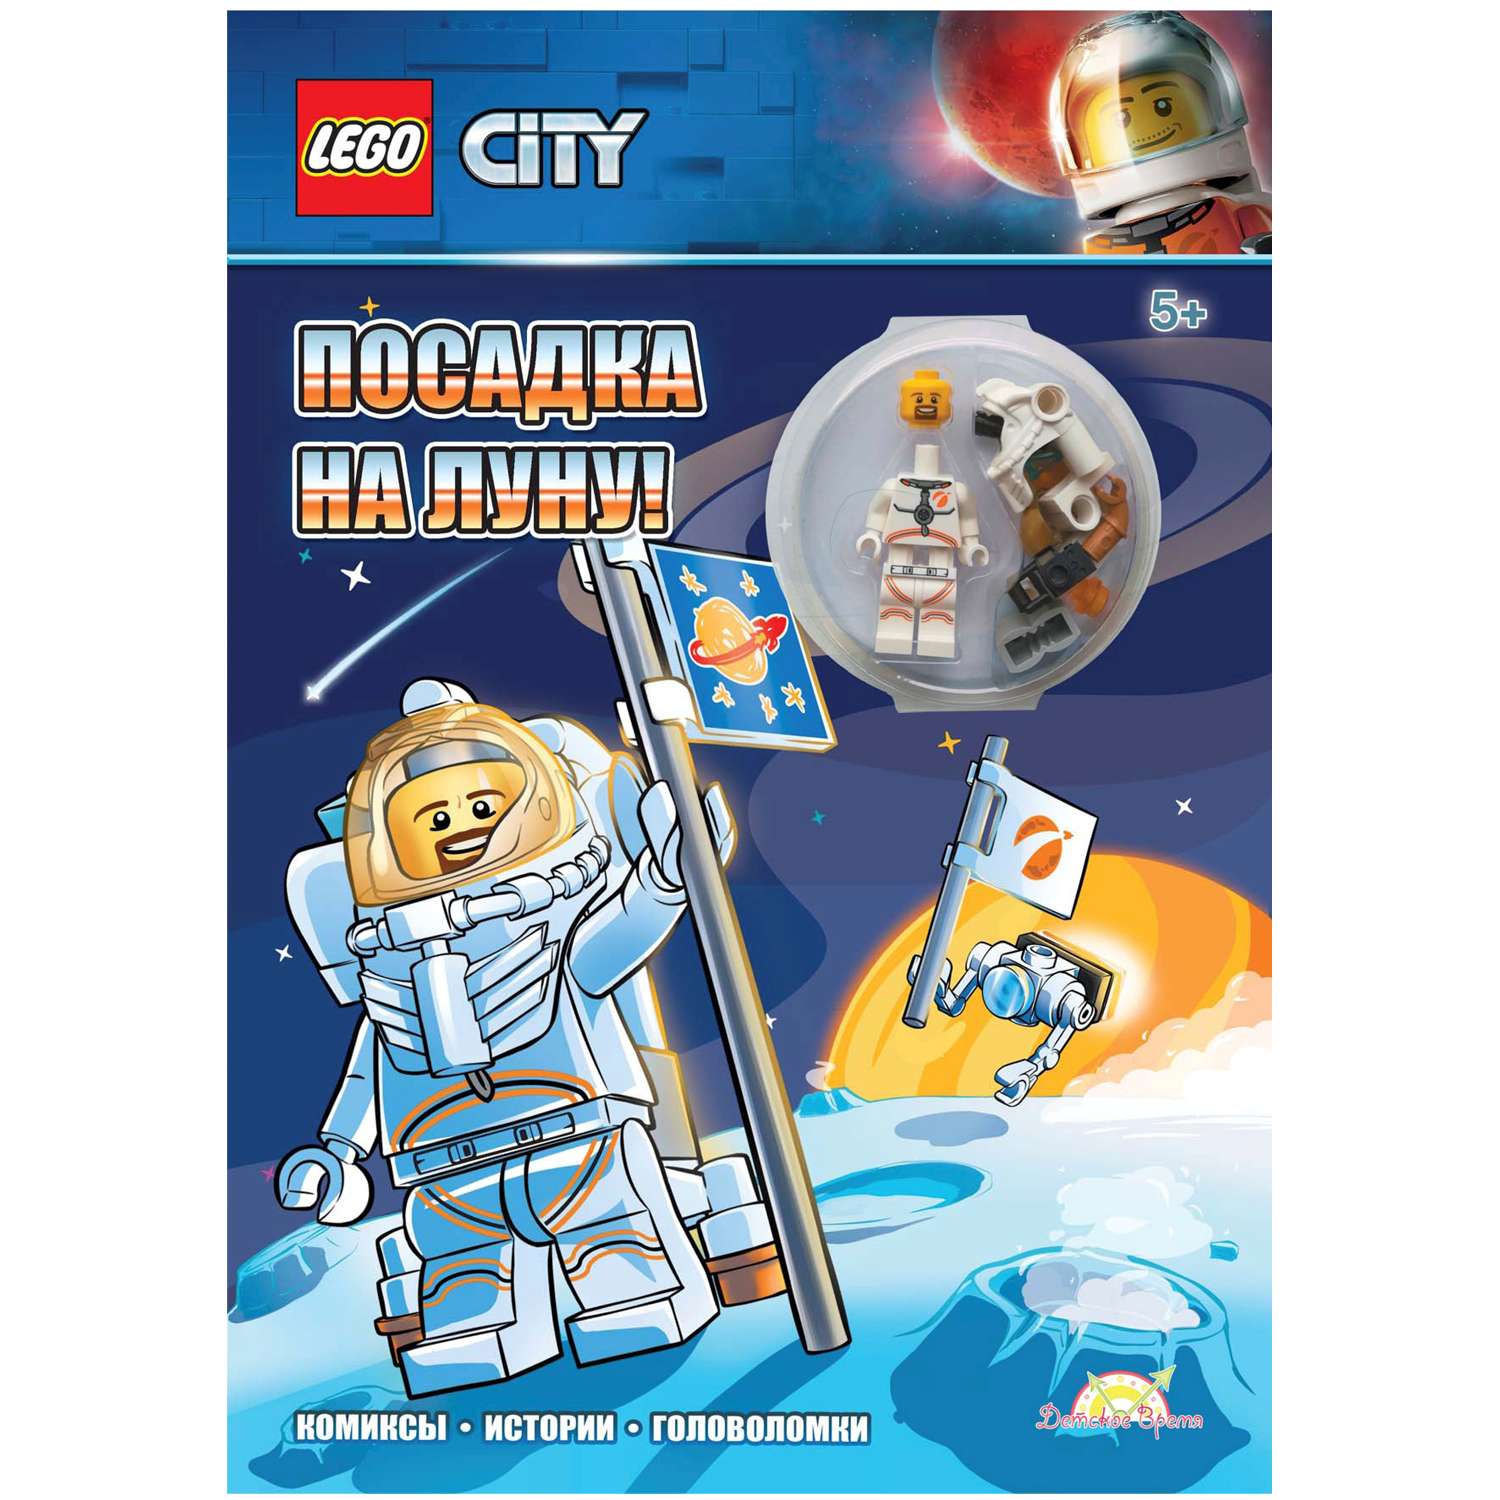 Книга LEGO city посадка на луну с игрушкой LNC-6019 - фото 1